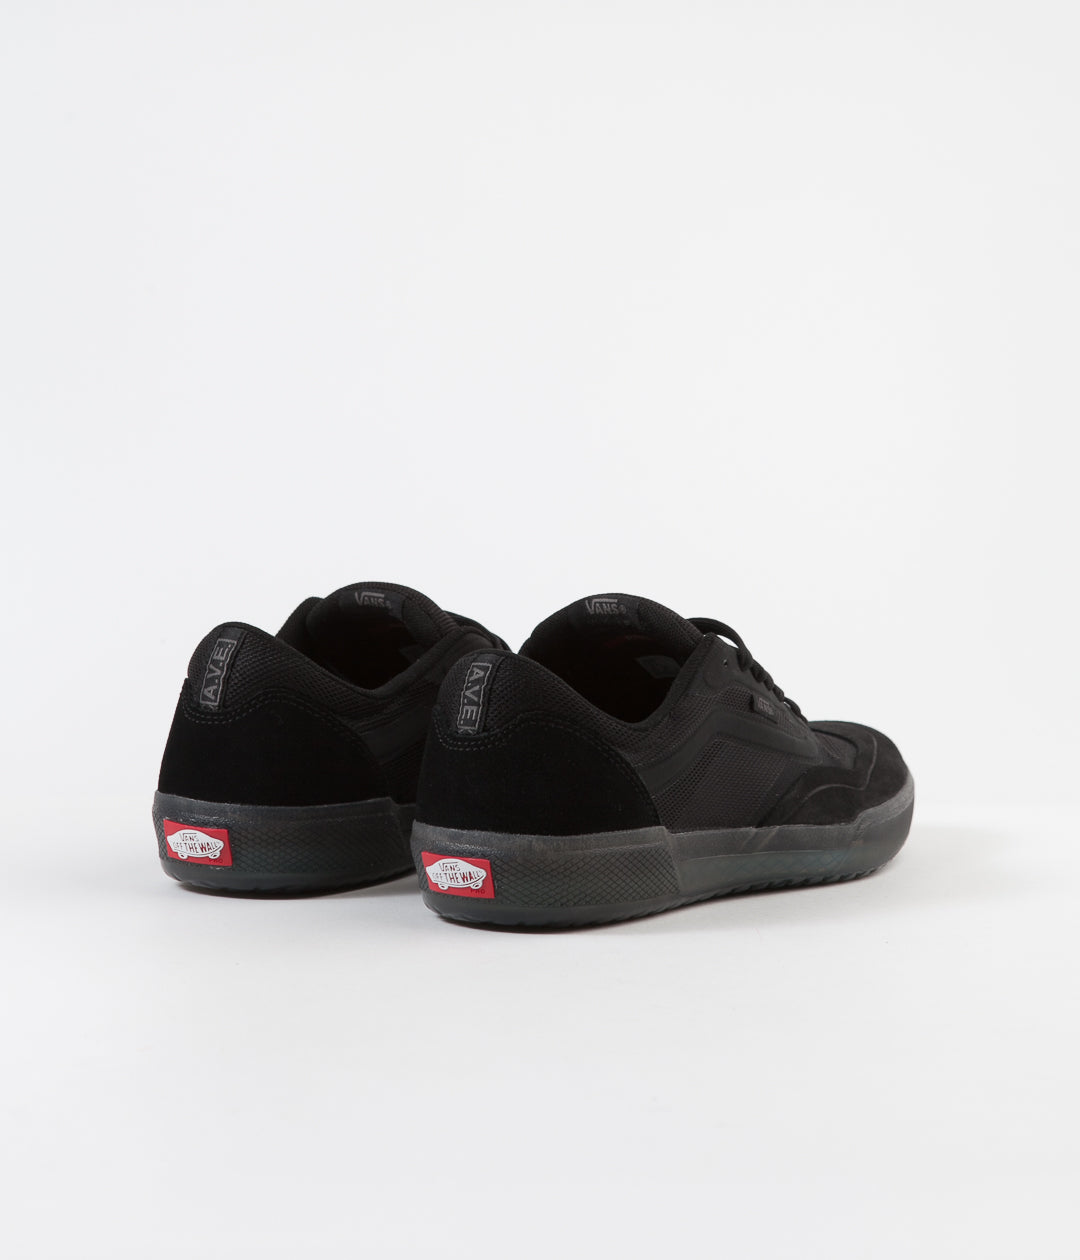 Vans AVE Pro Shoes - Black / Smoke | Flatspot